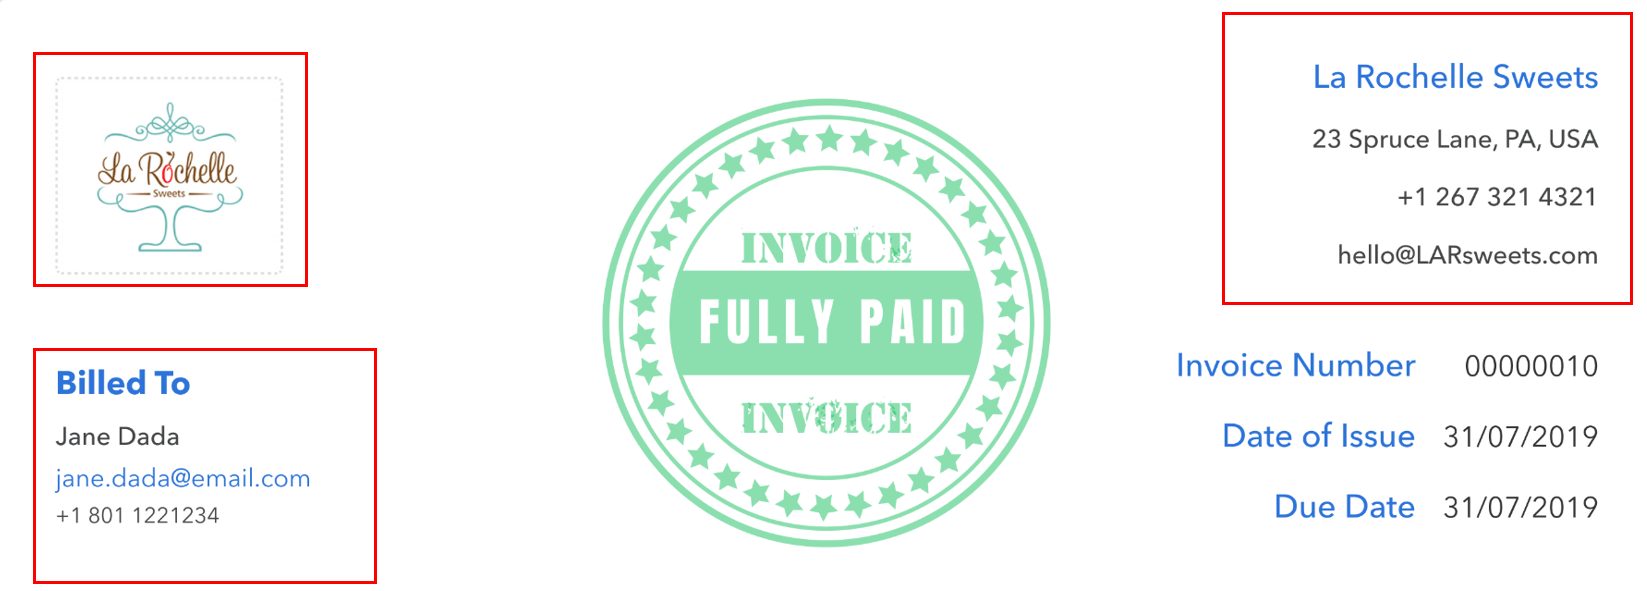 invoice information